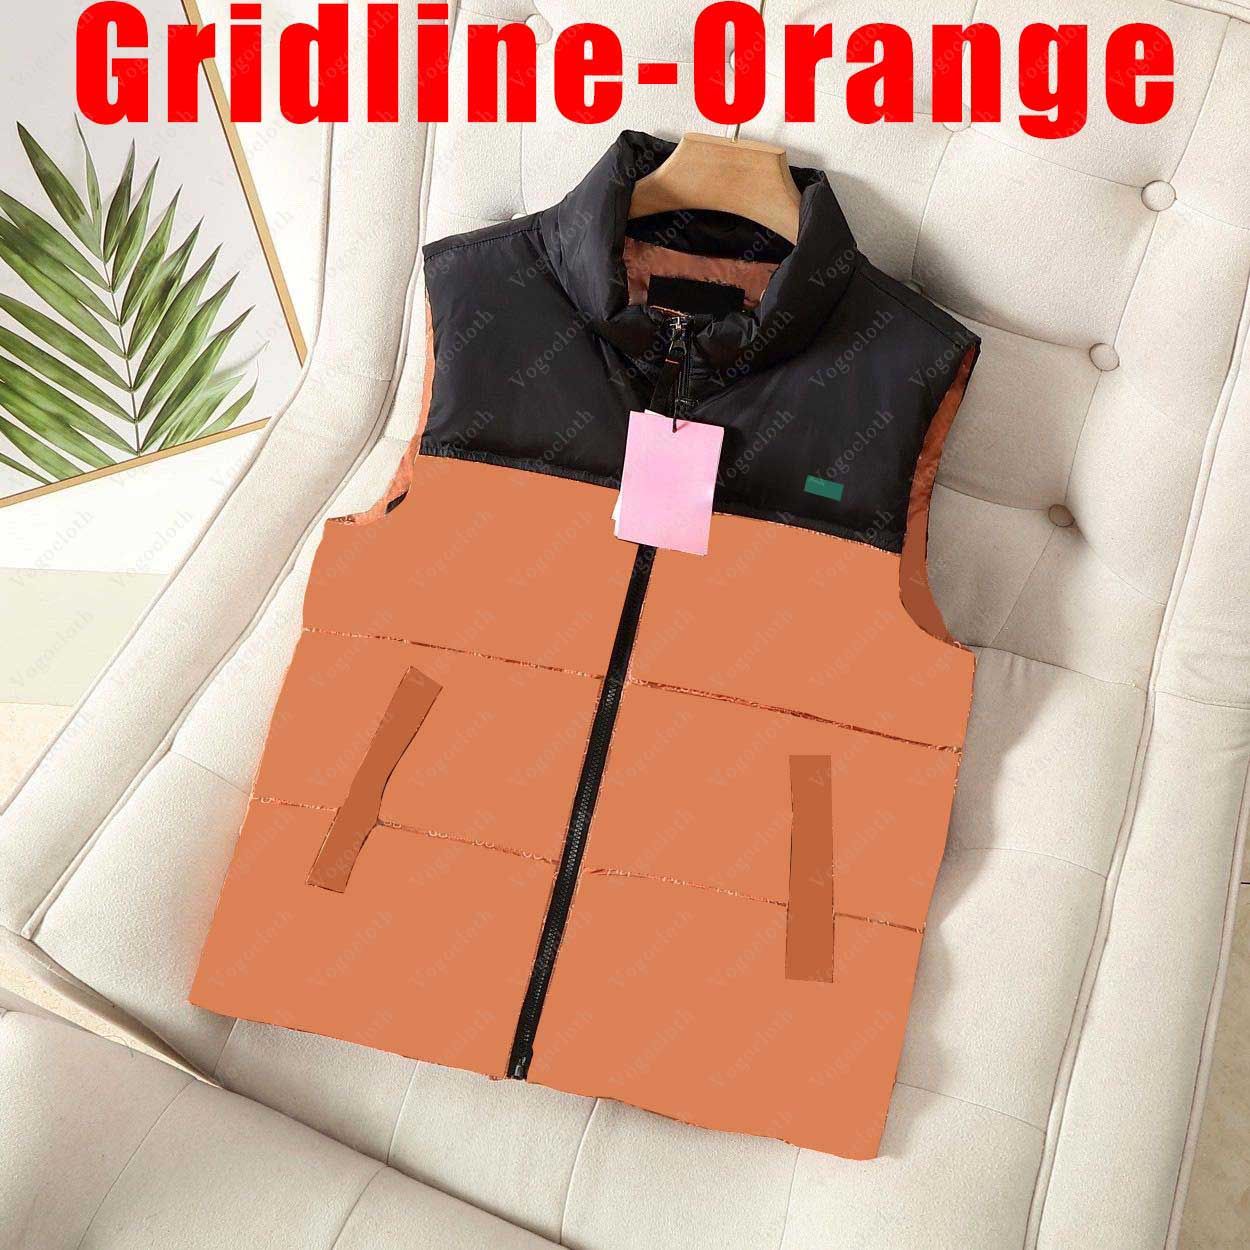 Gridline-Orange